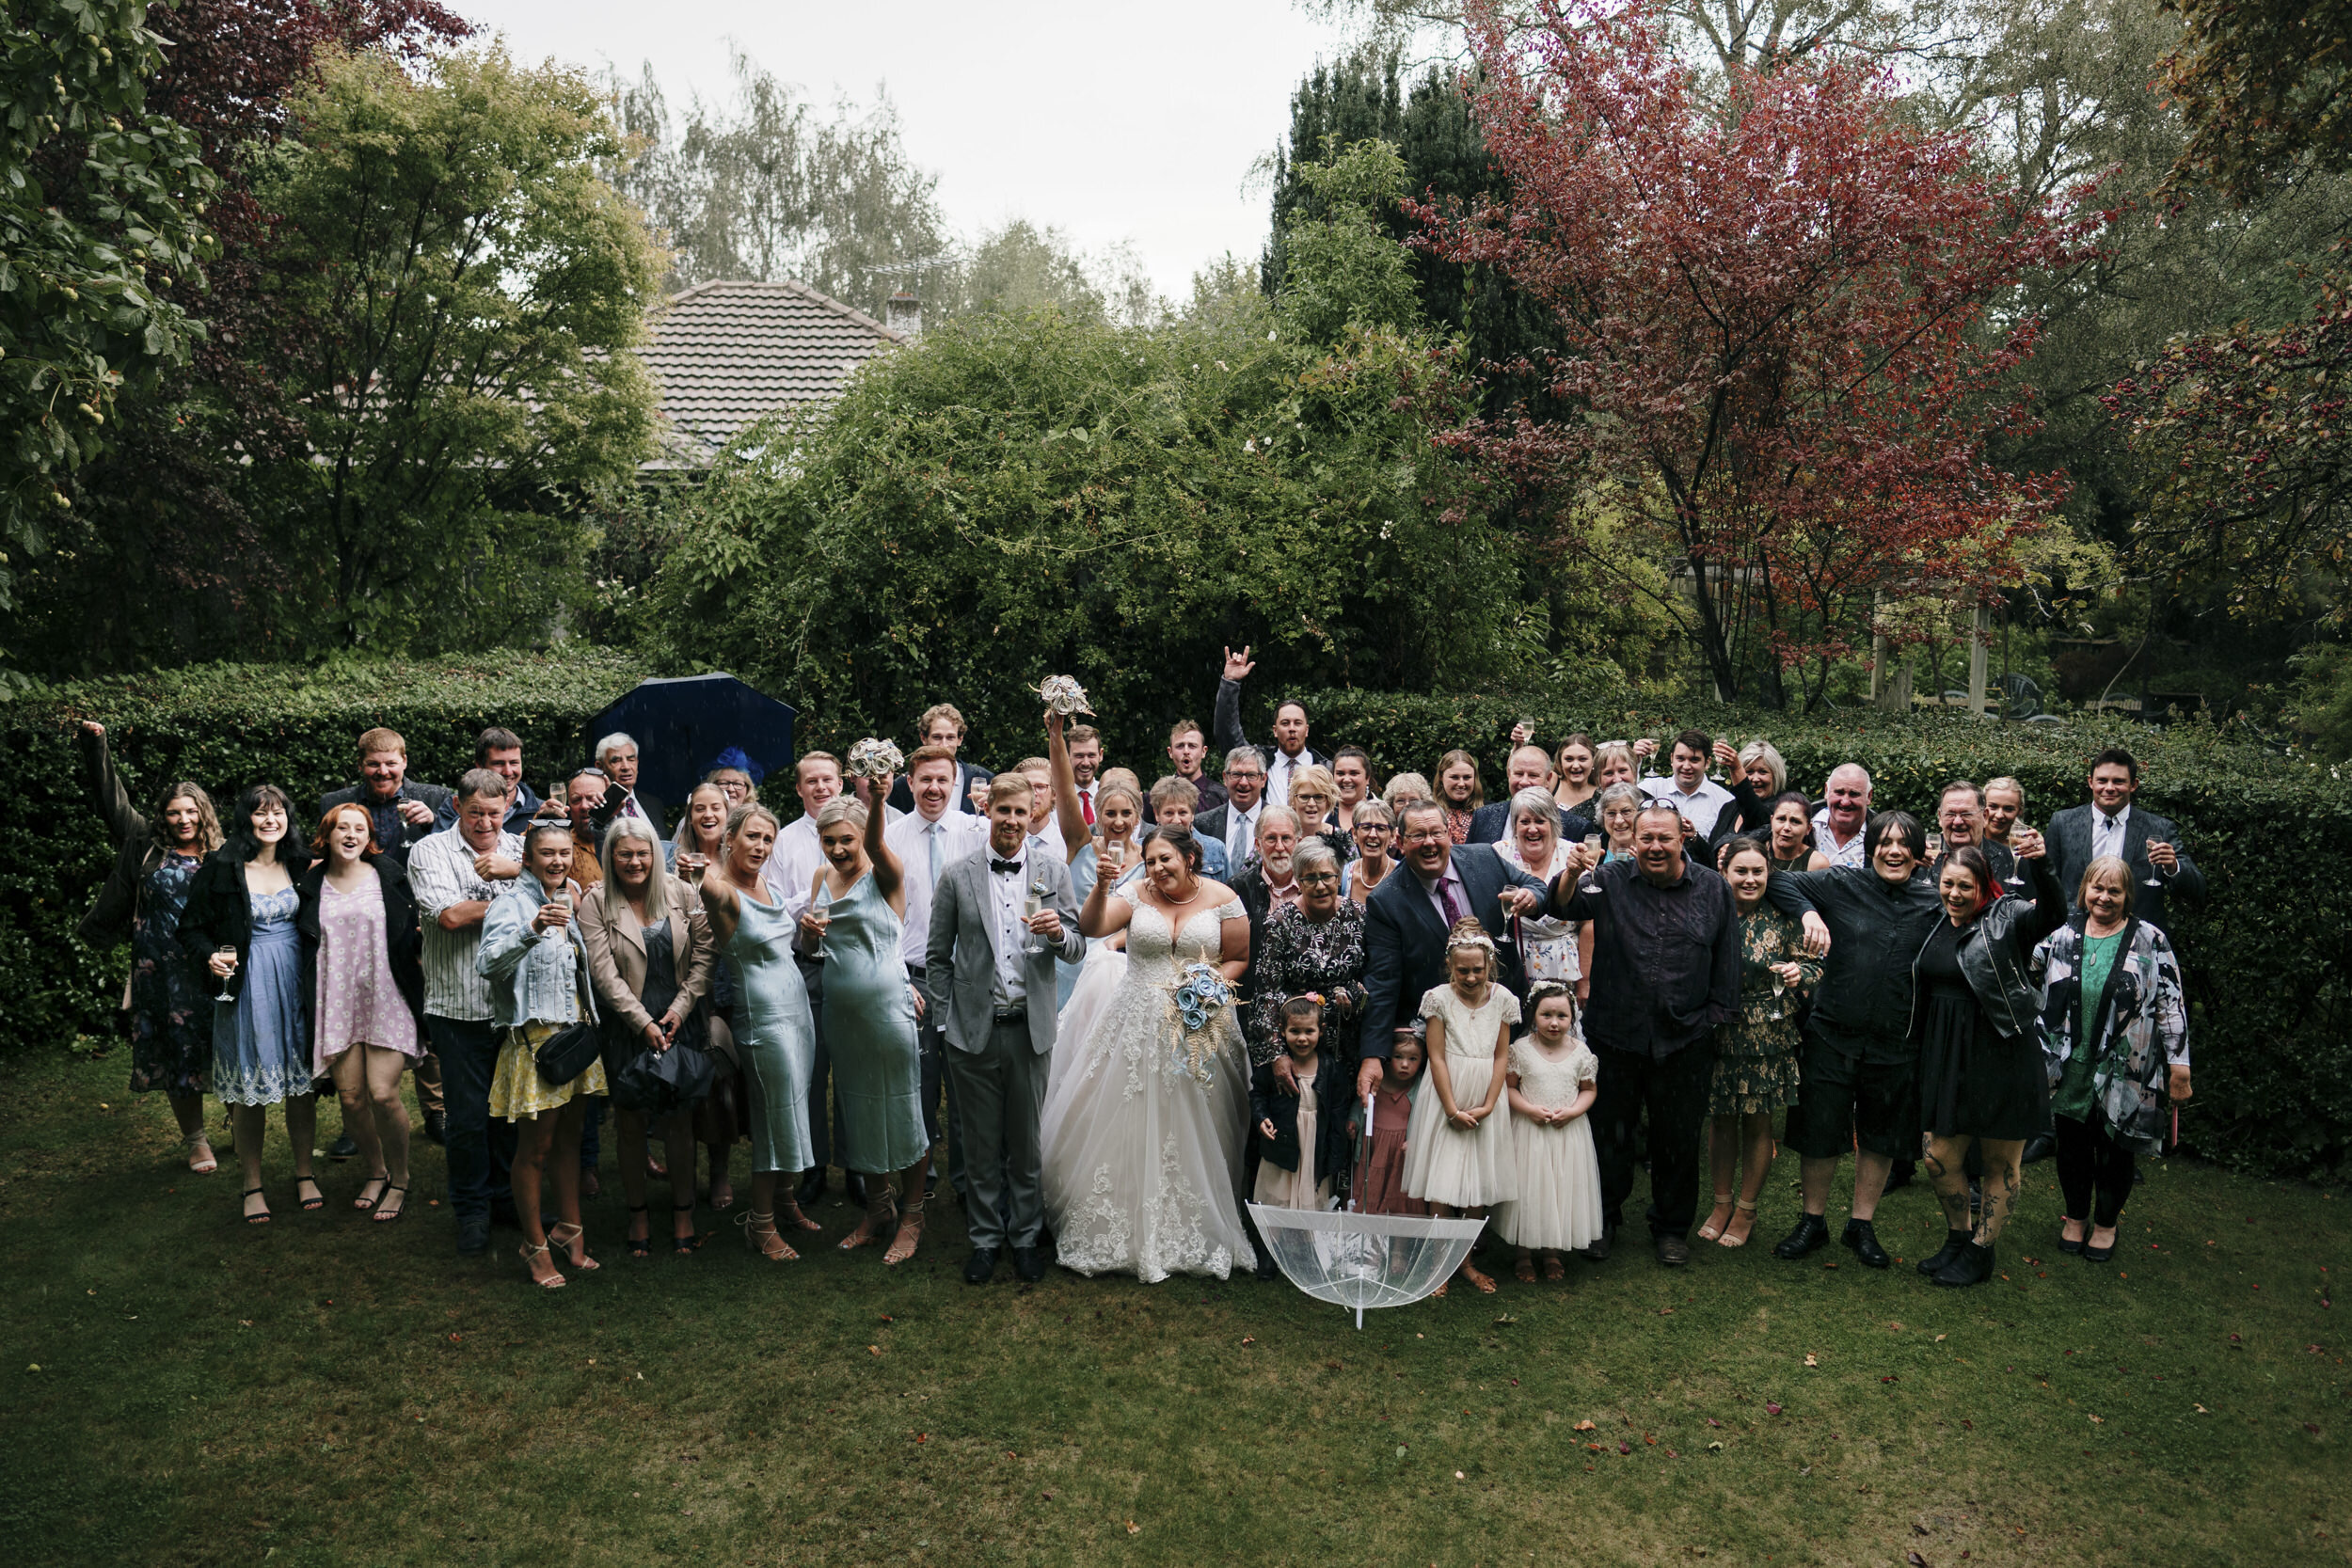 Auckland Wedding Photographer | Auckland Wedding Videographer | The Orchard Garden | Destination Photographer | Central Otago Wedding Venue